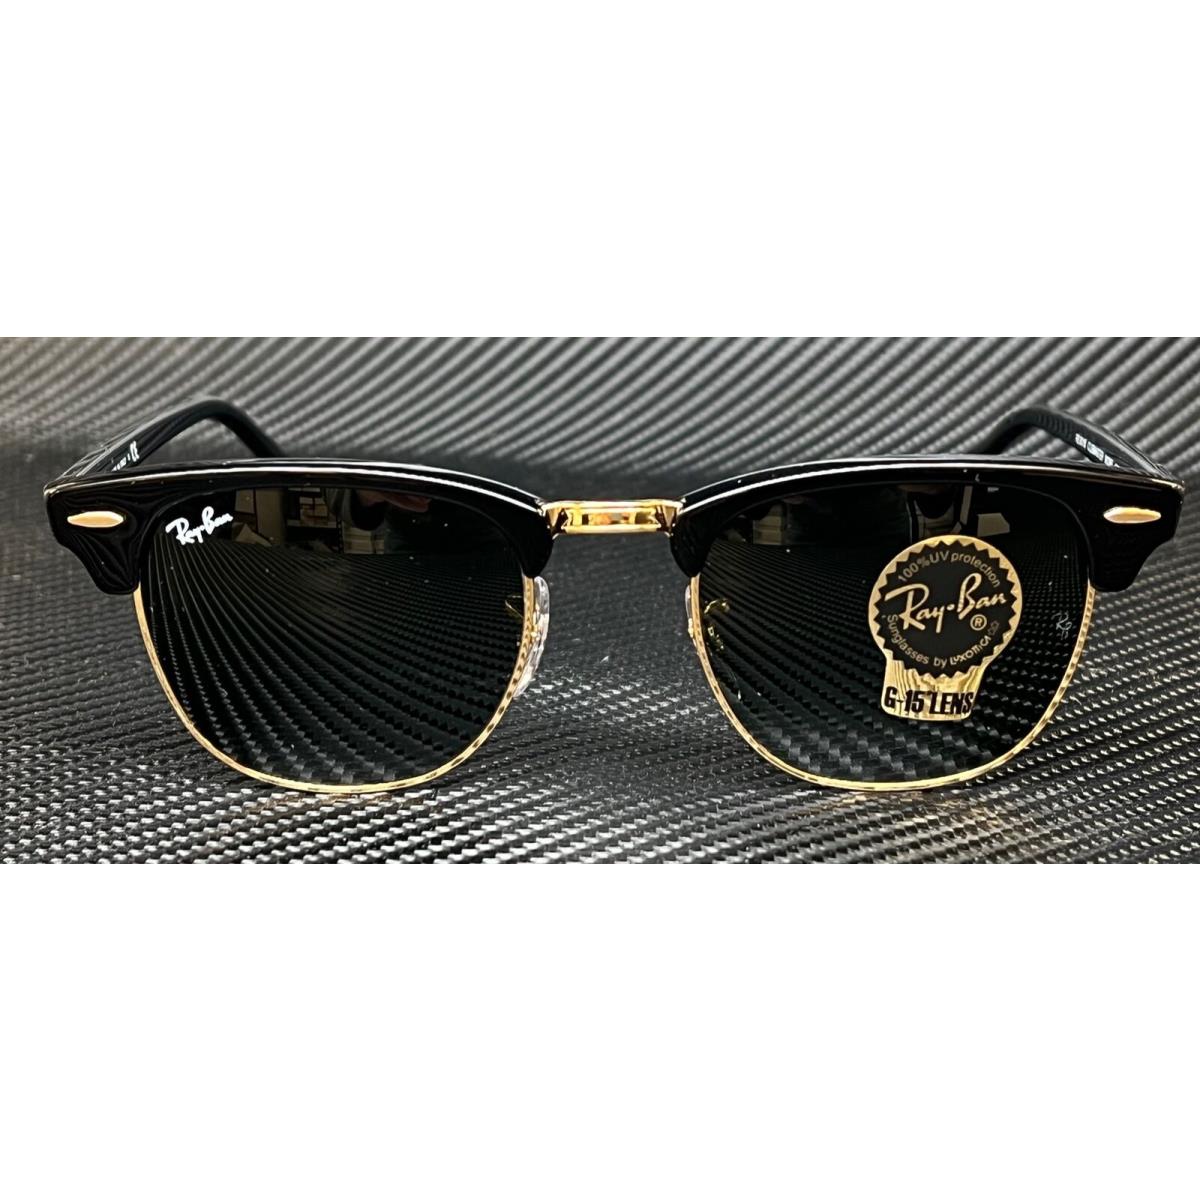 Ray Ban RB3016 W0365 Black on Arista Square 49 mm Unisex Sunglasses - Frame: Black, Lens: Green